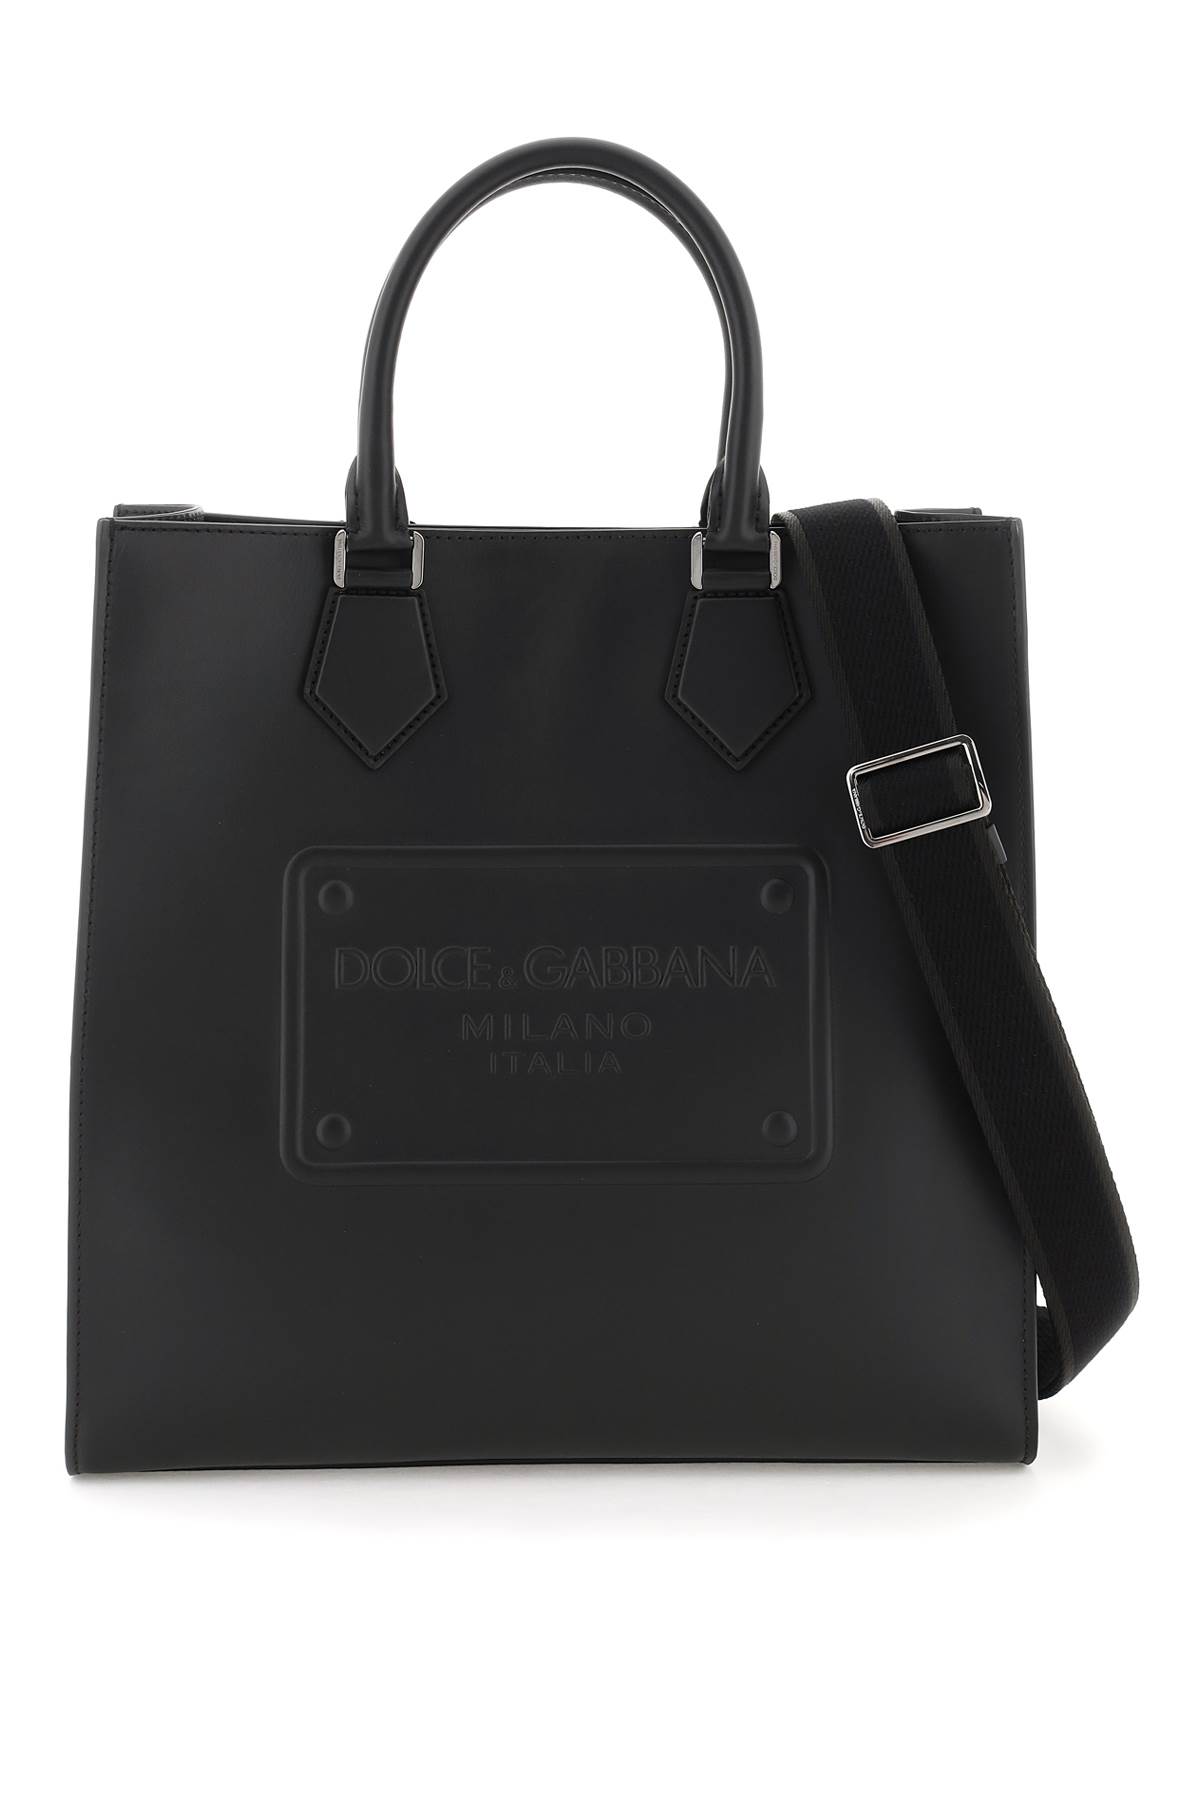 Dolce & Gabbana Leather Tote Bag In Nero